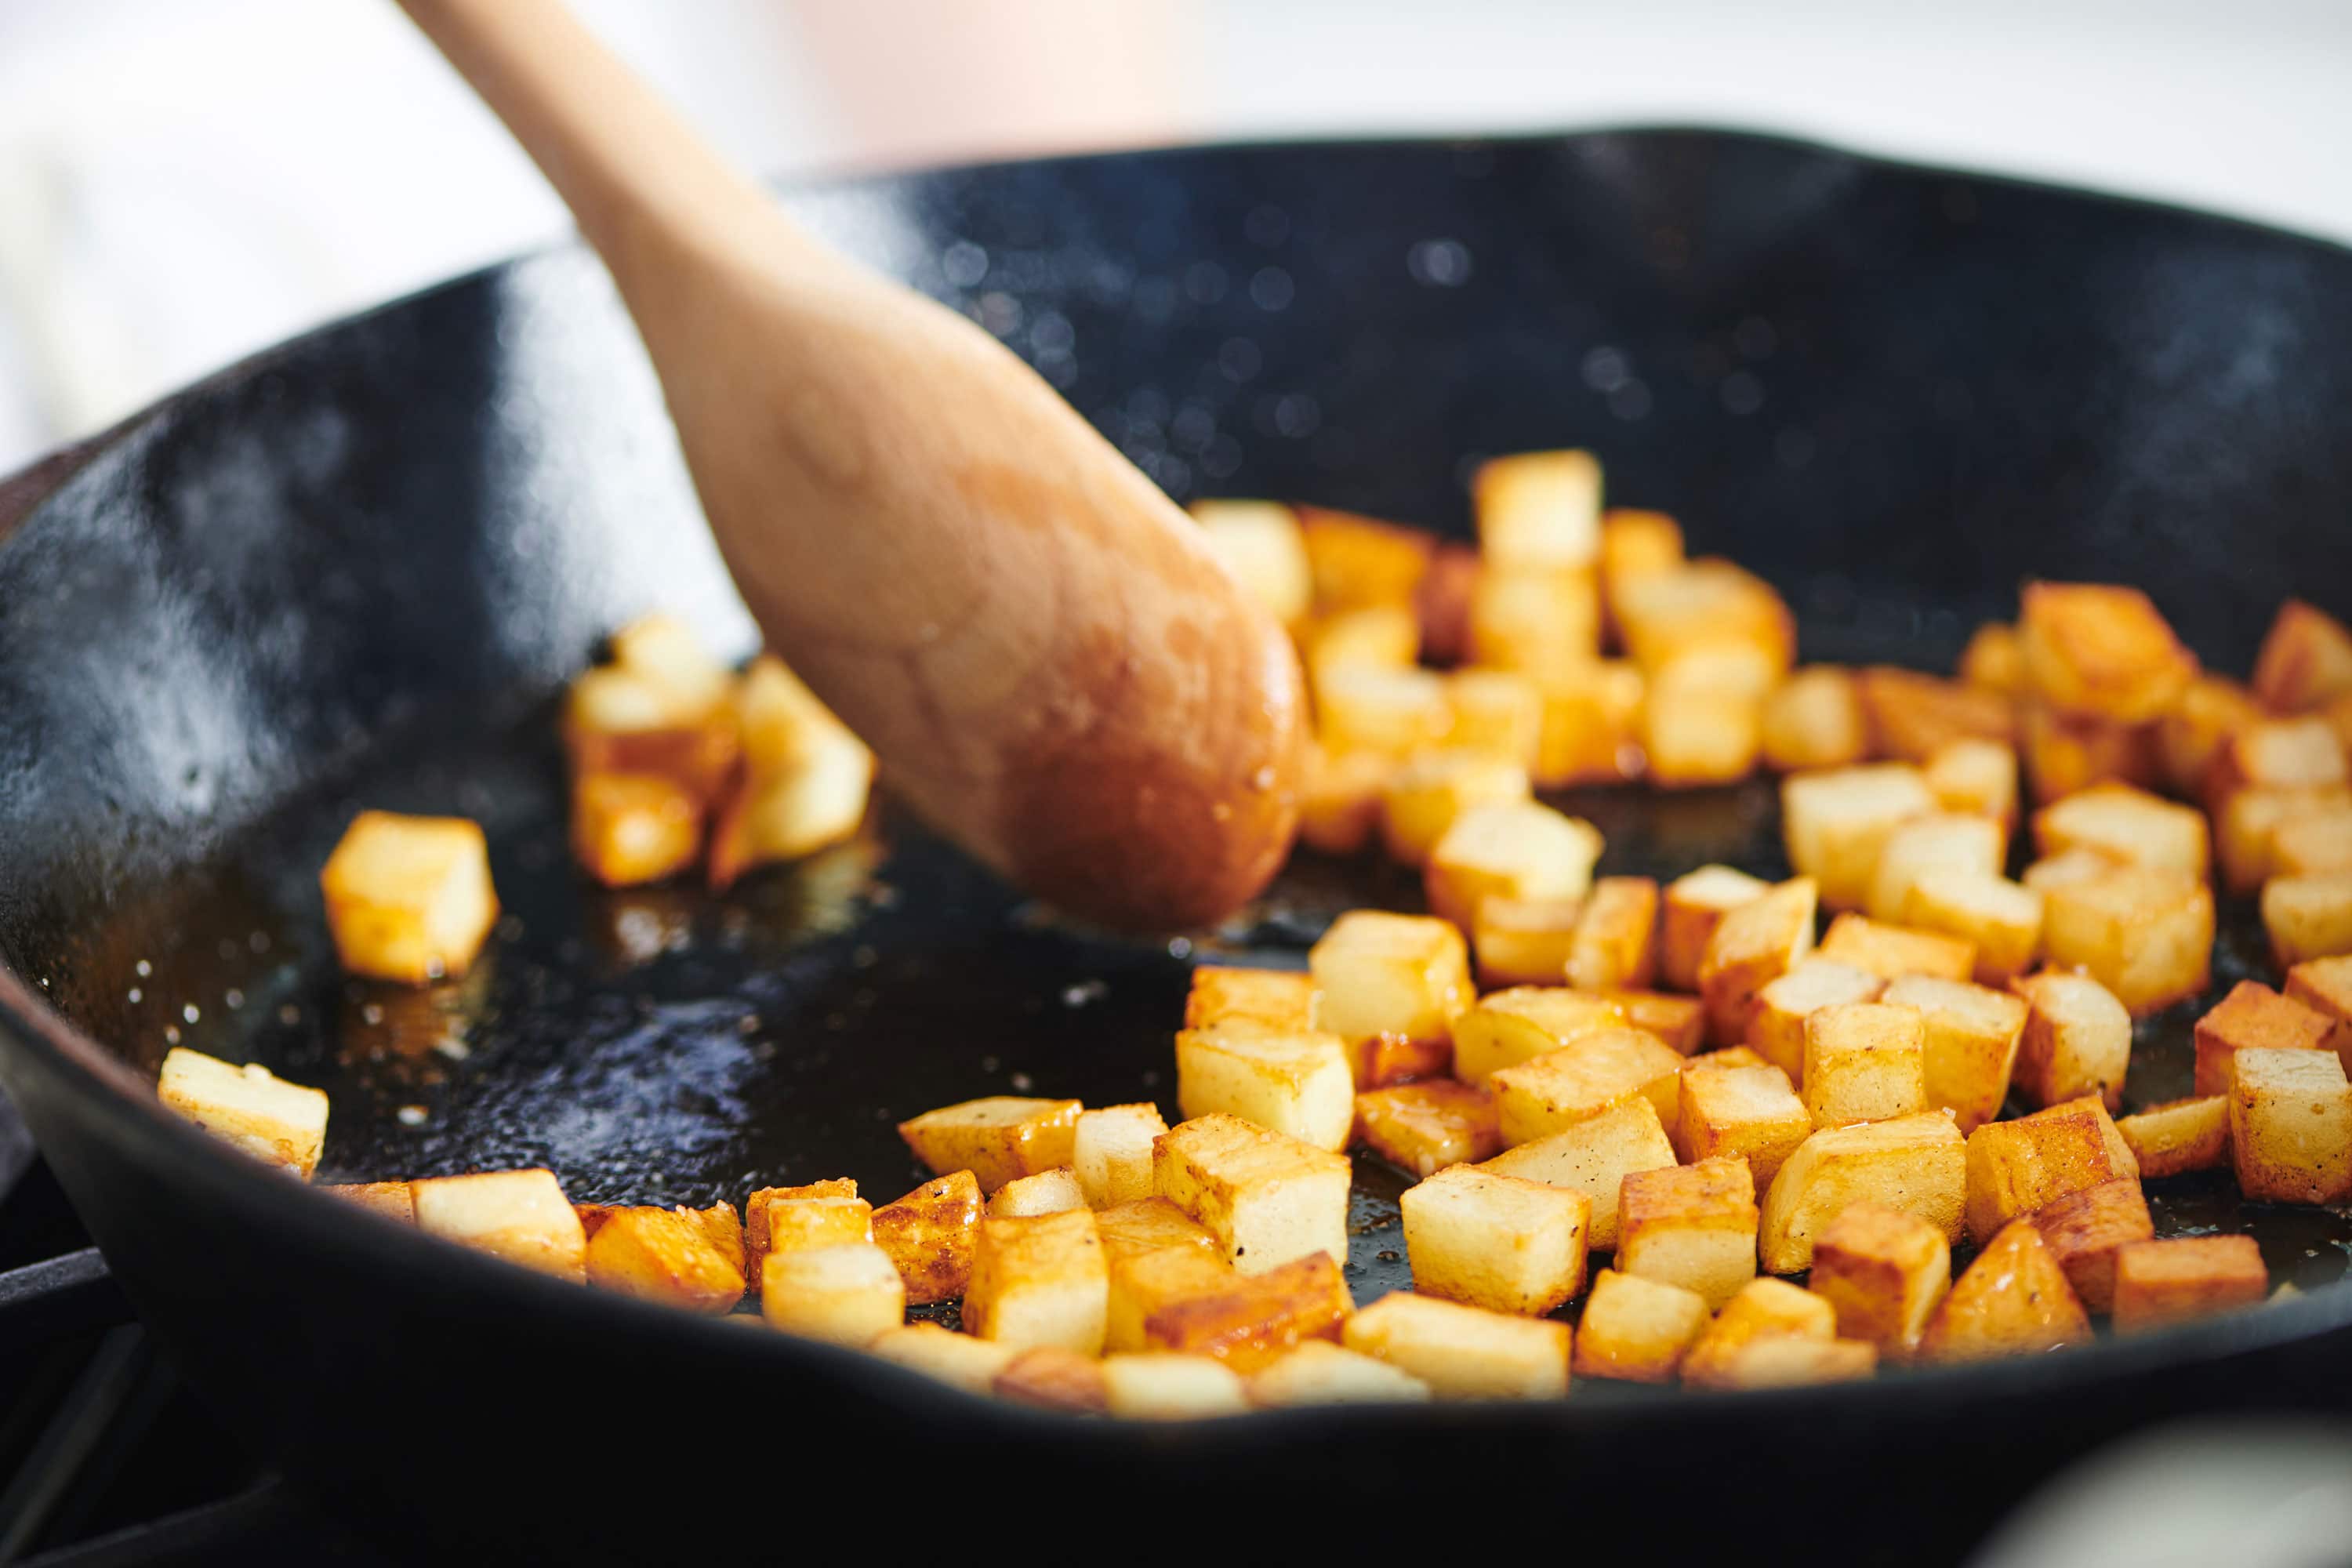 Best Pan-Fried Potatoes Recipe - How to Pan-Fry Potatoes